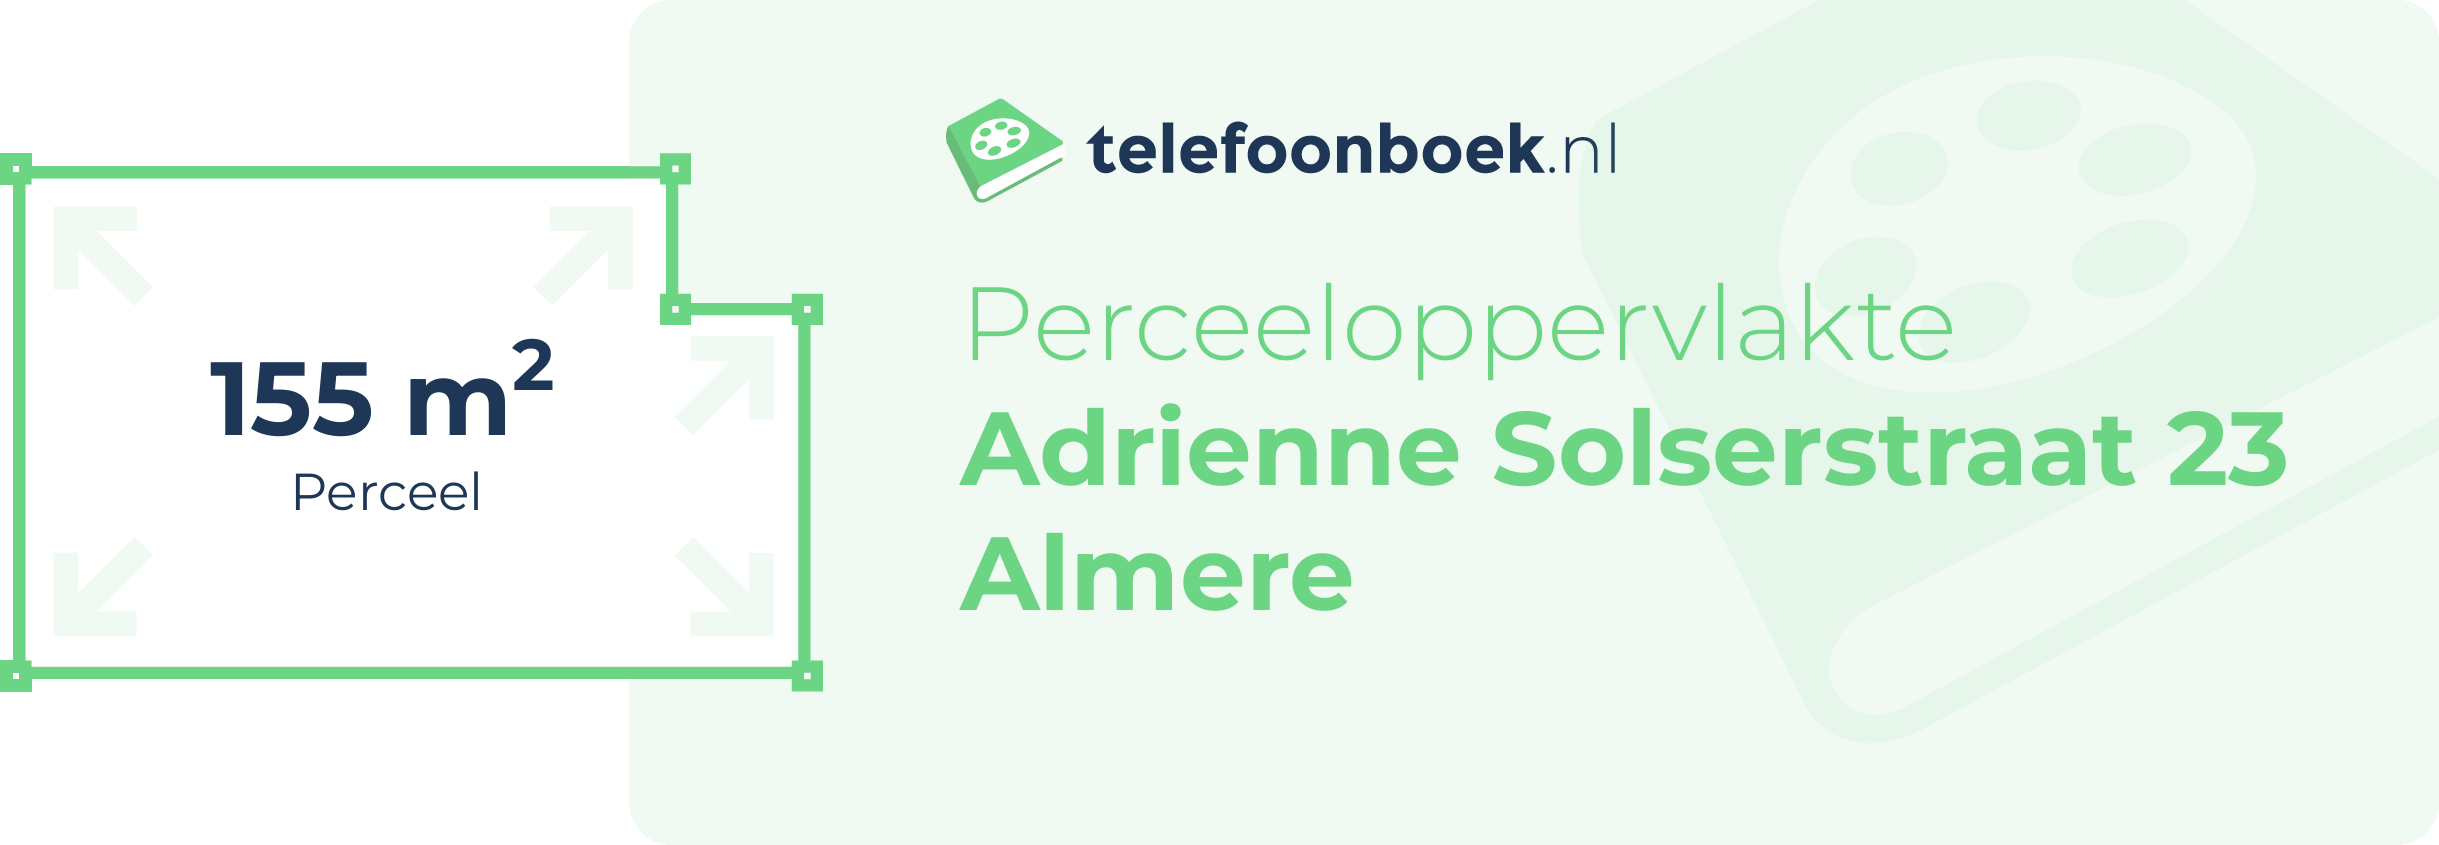 Perceeloppervlakte Adrienne Solserstraat 23 Almere